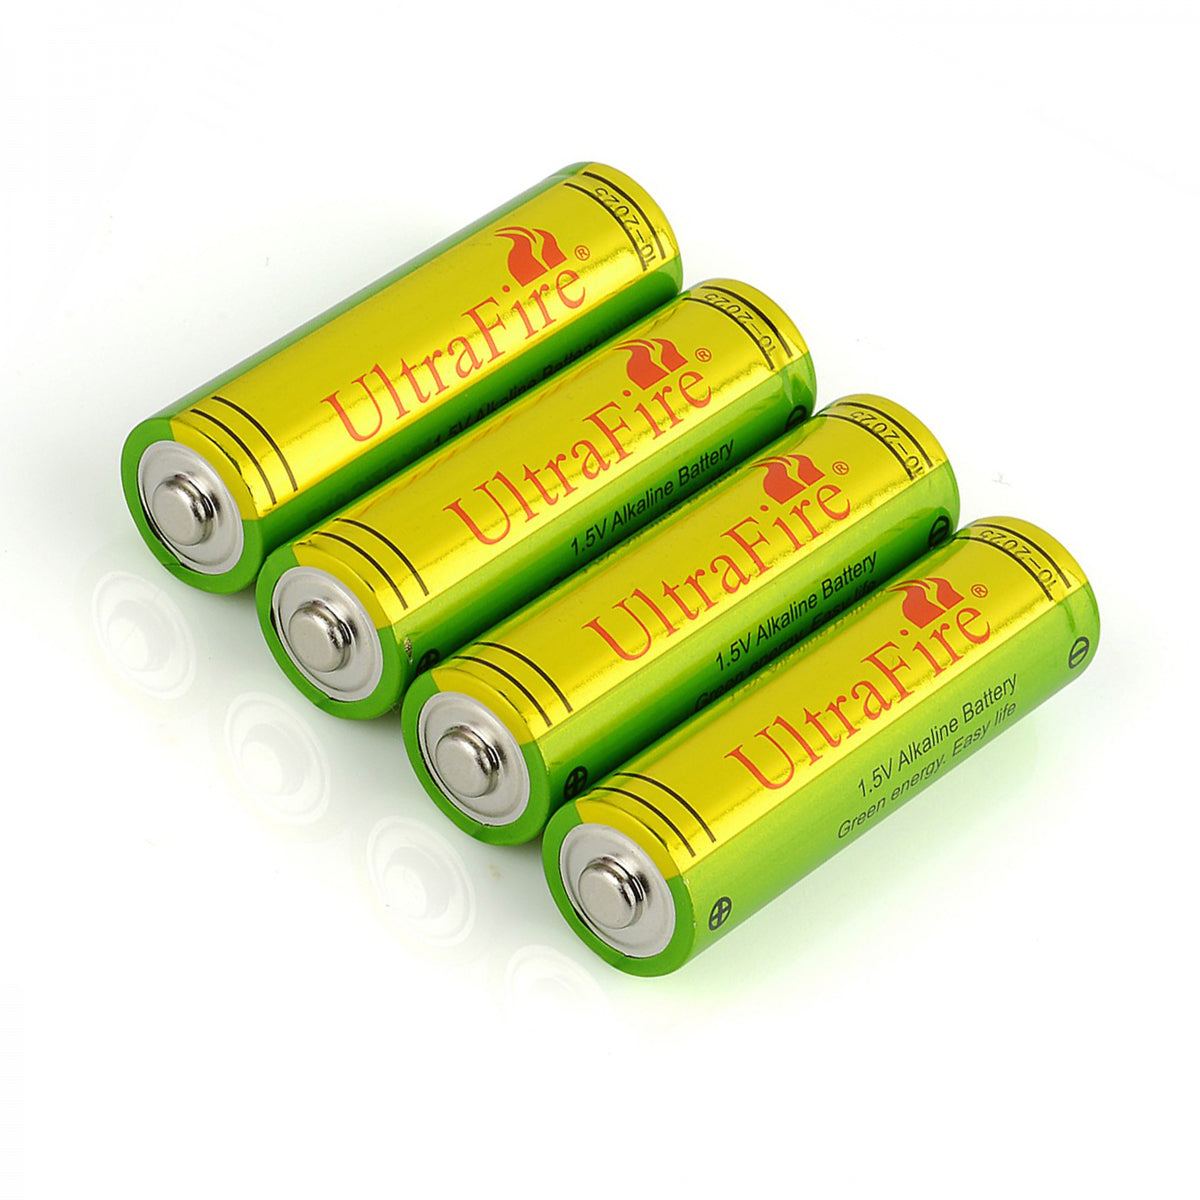 UltraFire  AA 1.5 Volt Performance Alkaline Batteries - Pack of 4 Grain